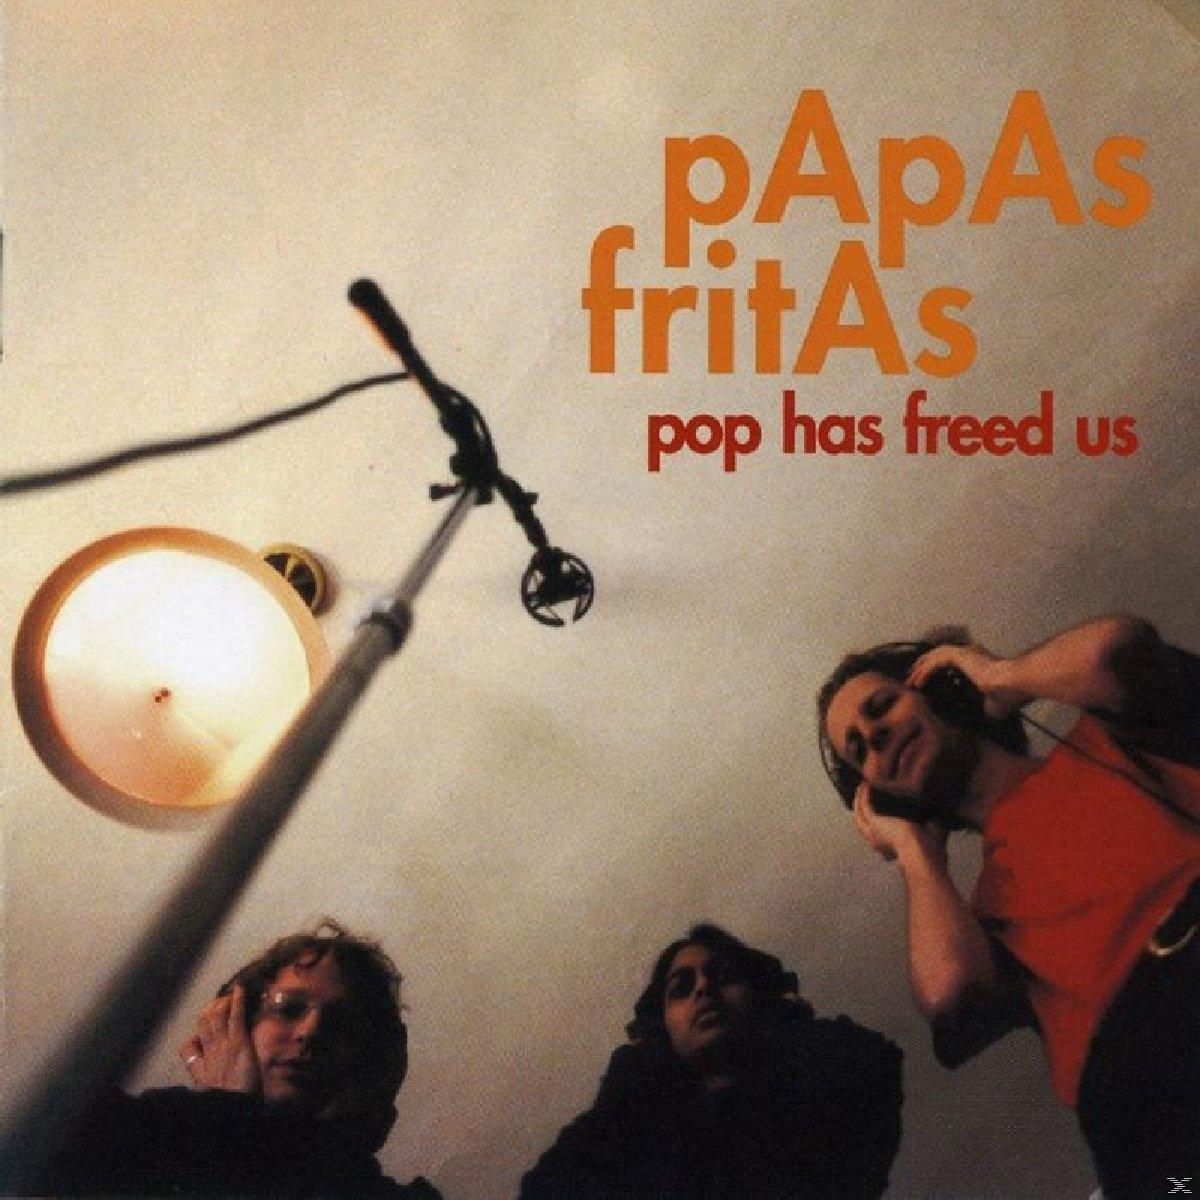 Us - Papas Pop Freed Has (CD) - Fritas